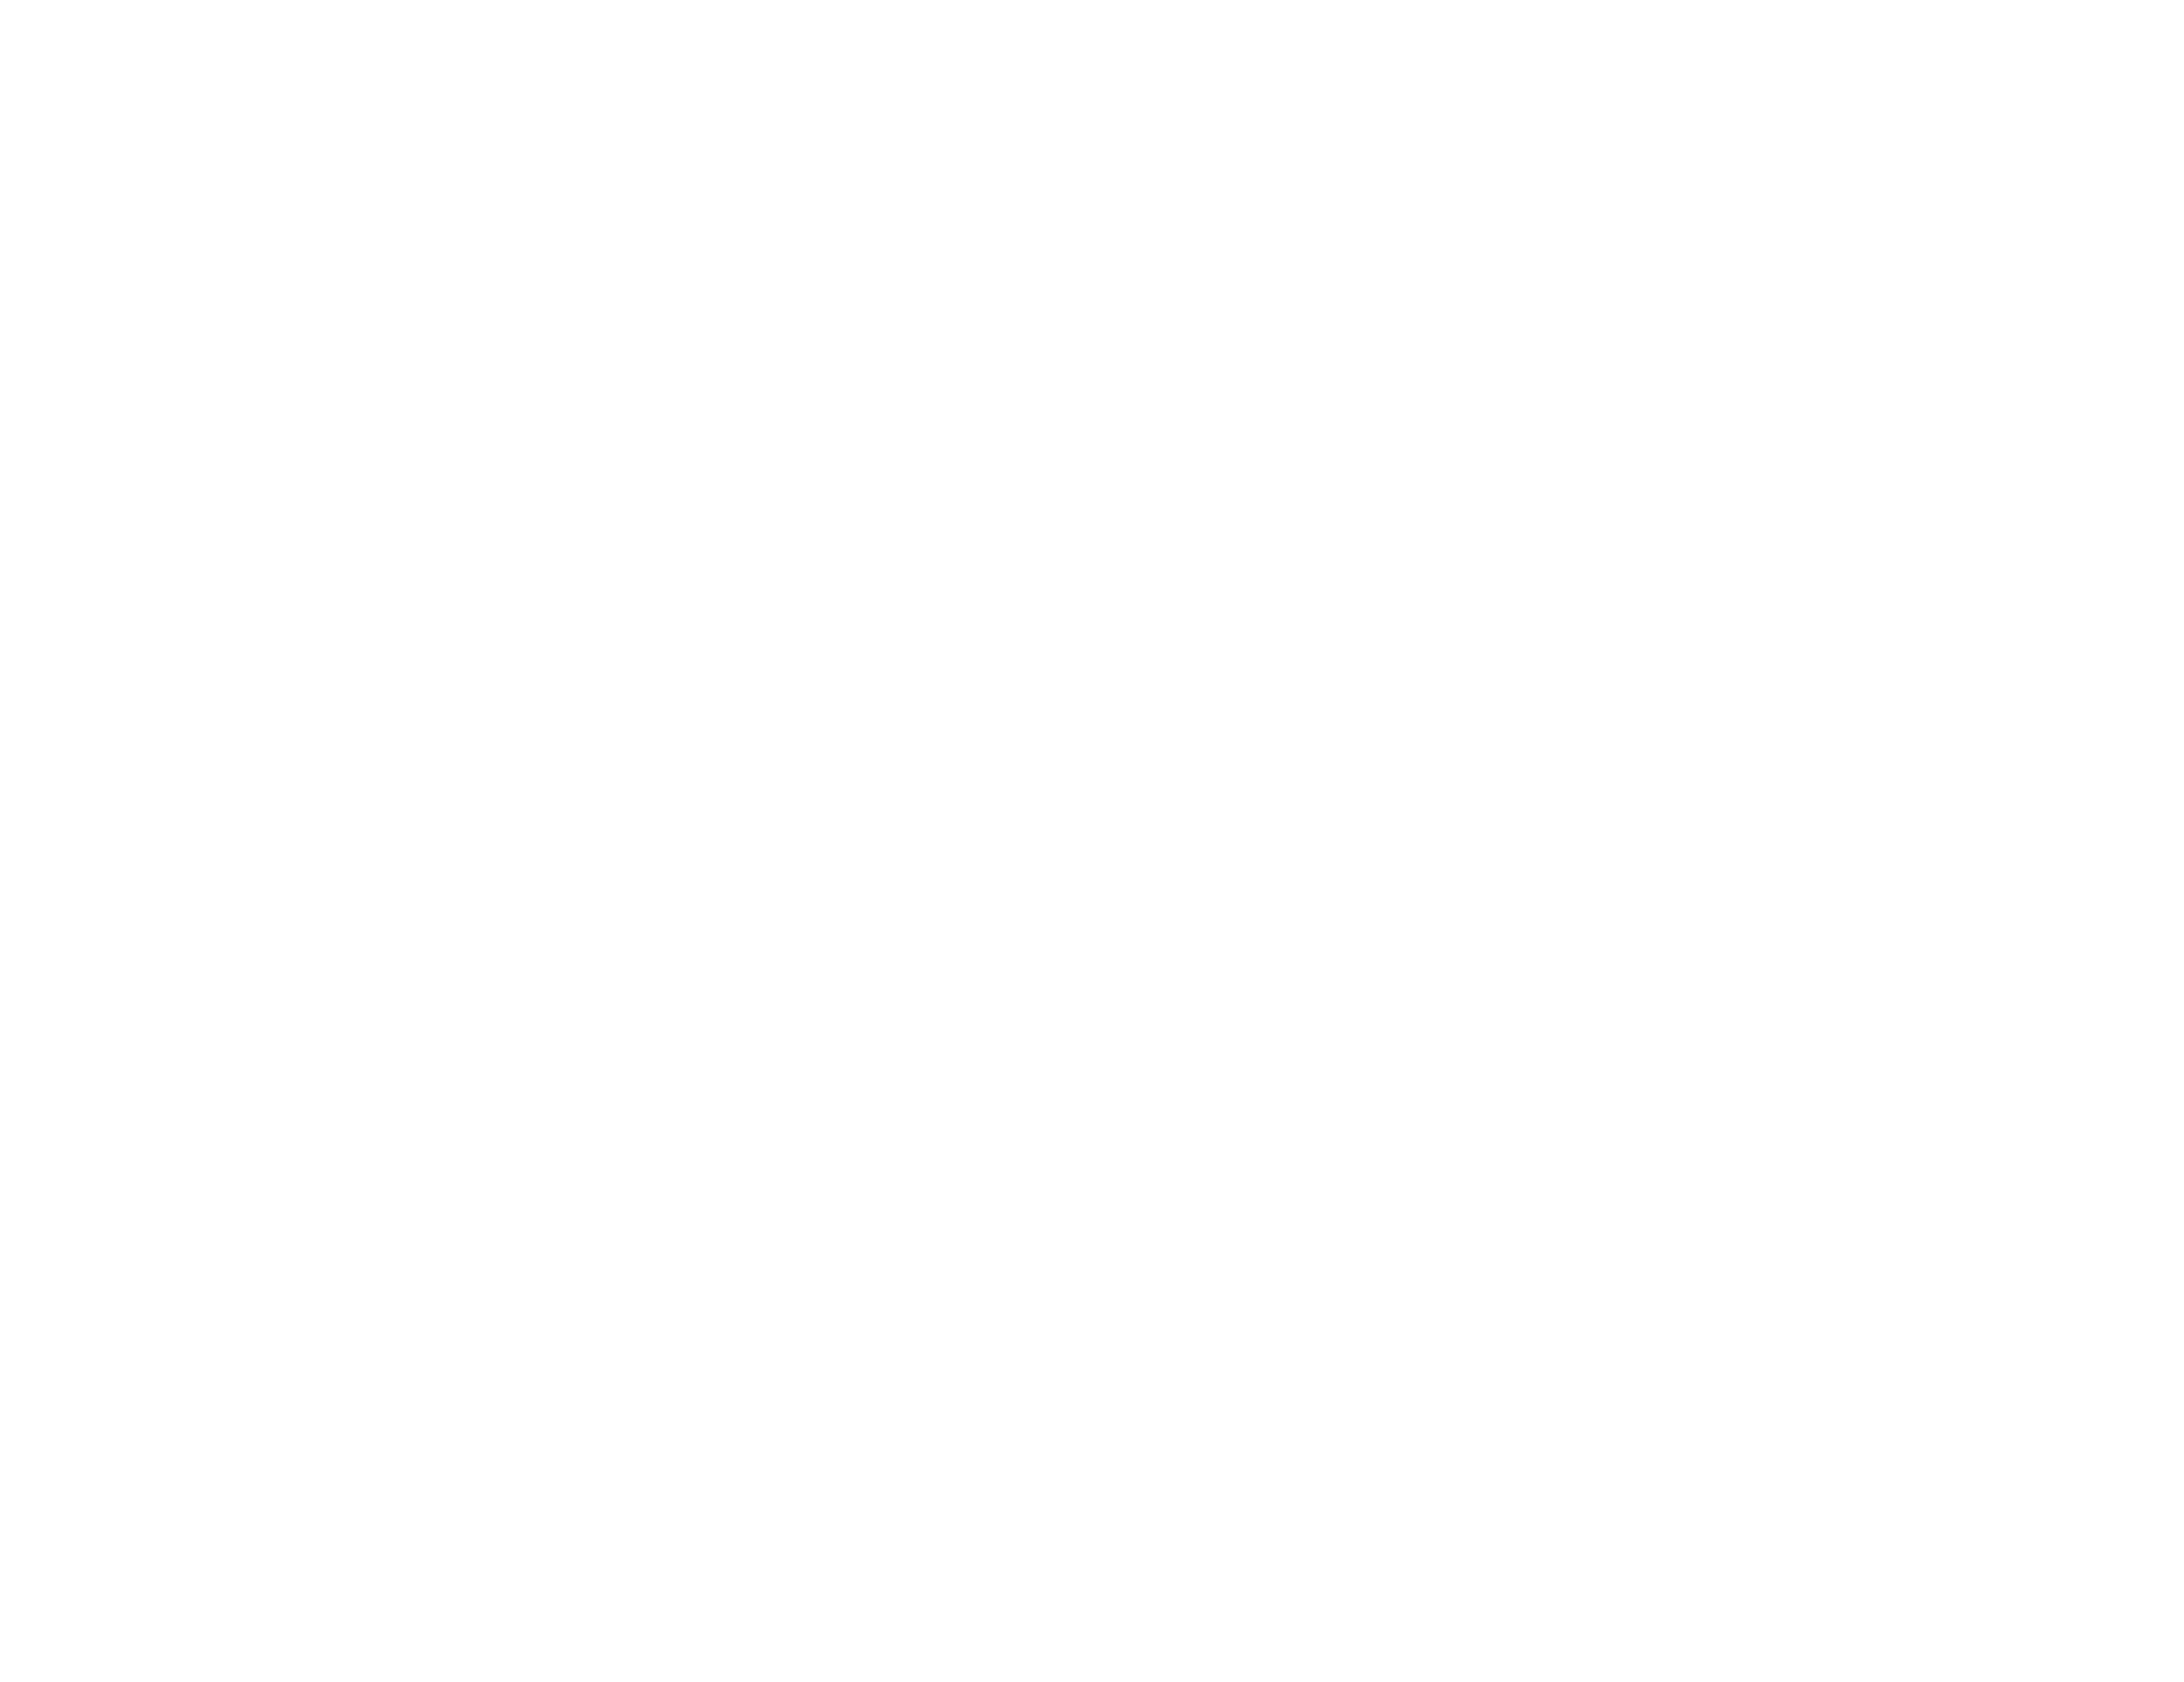 Editions Aspic games